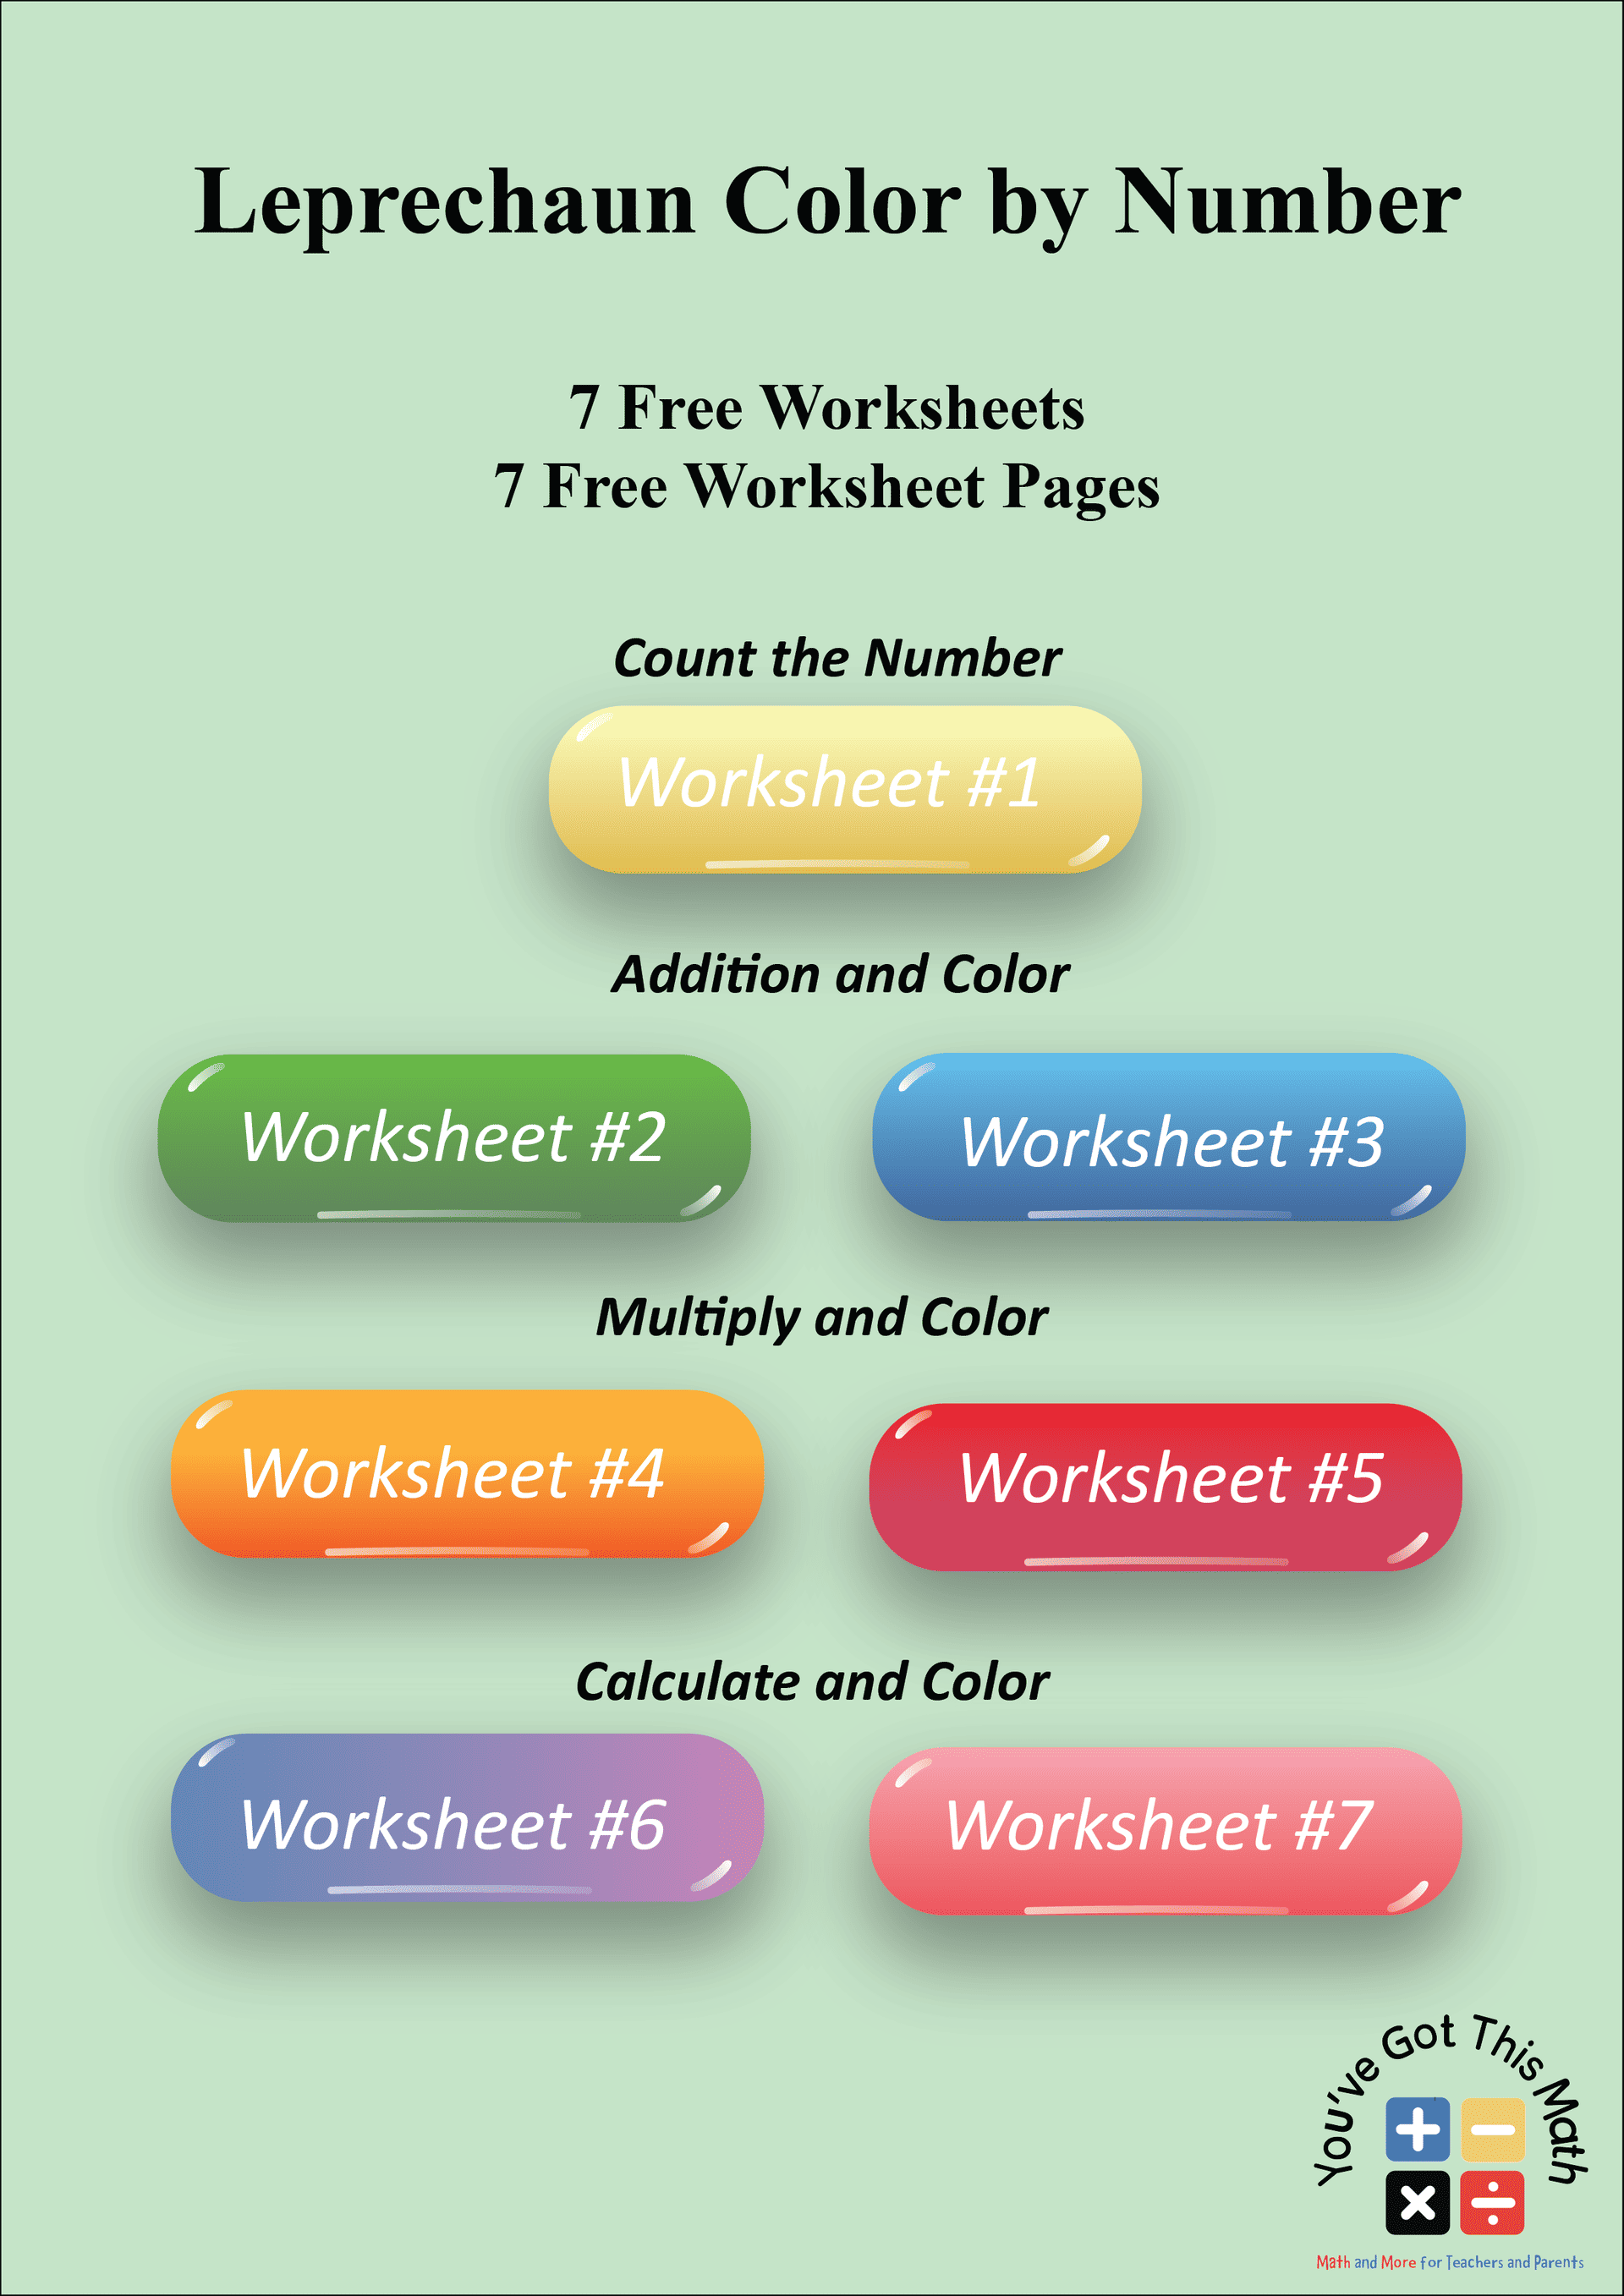 Leprechaun Color by Number | Fun Activities